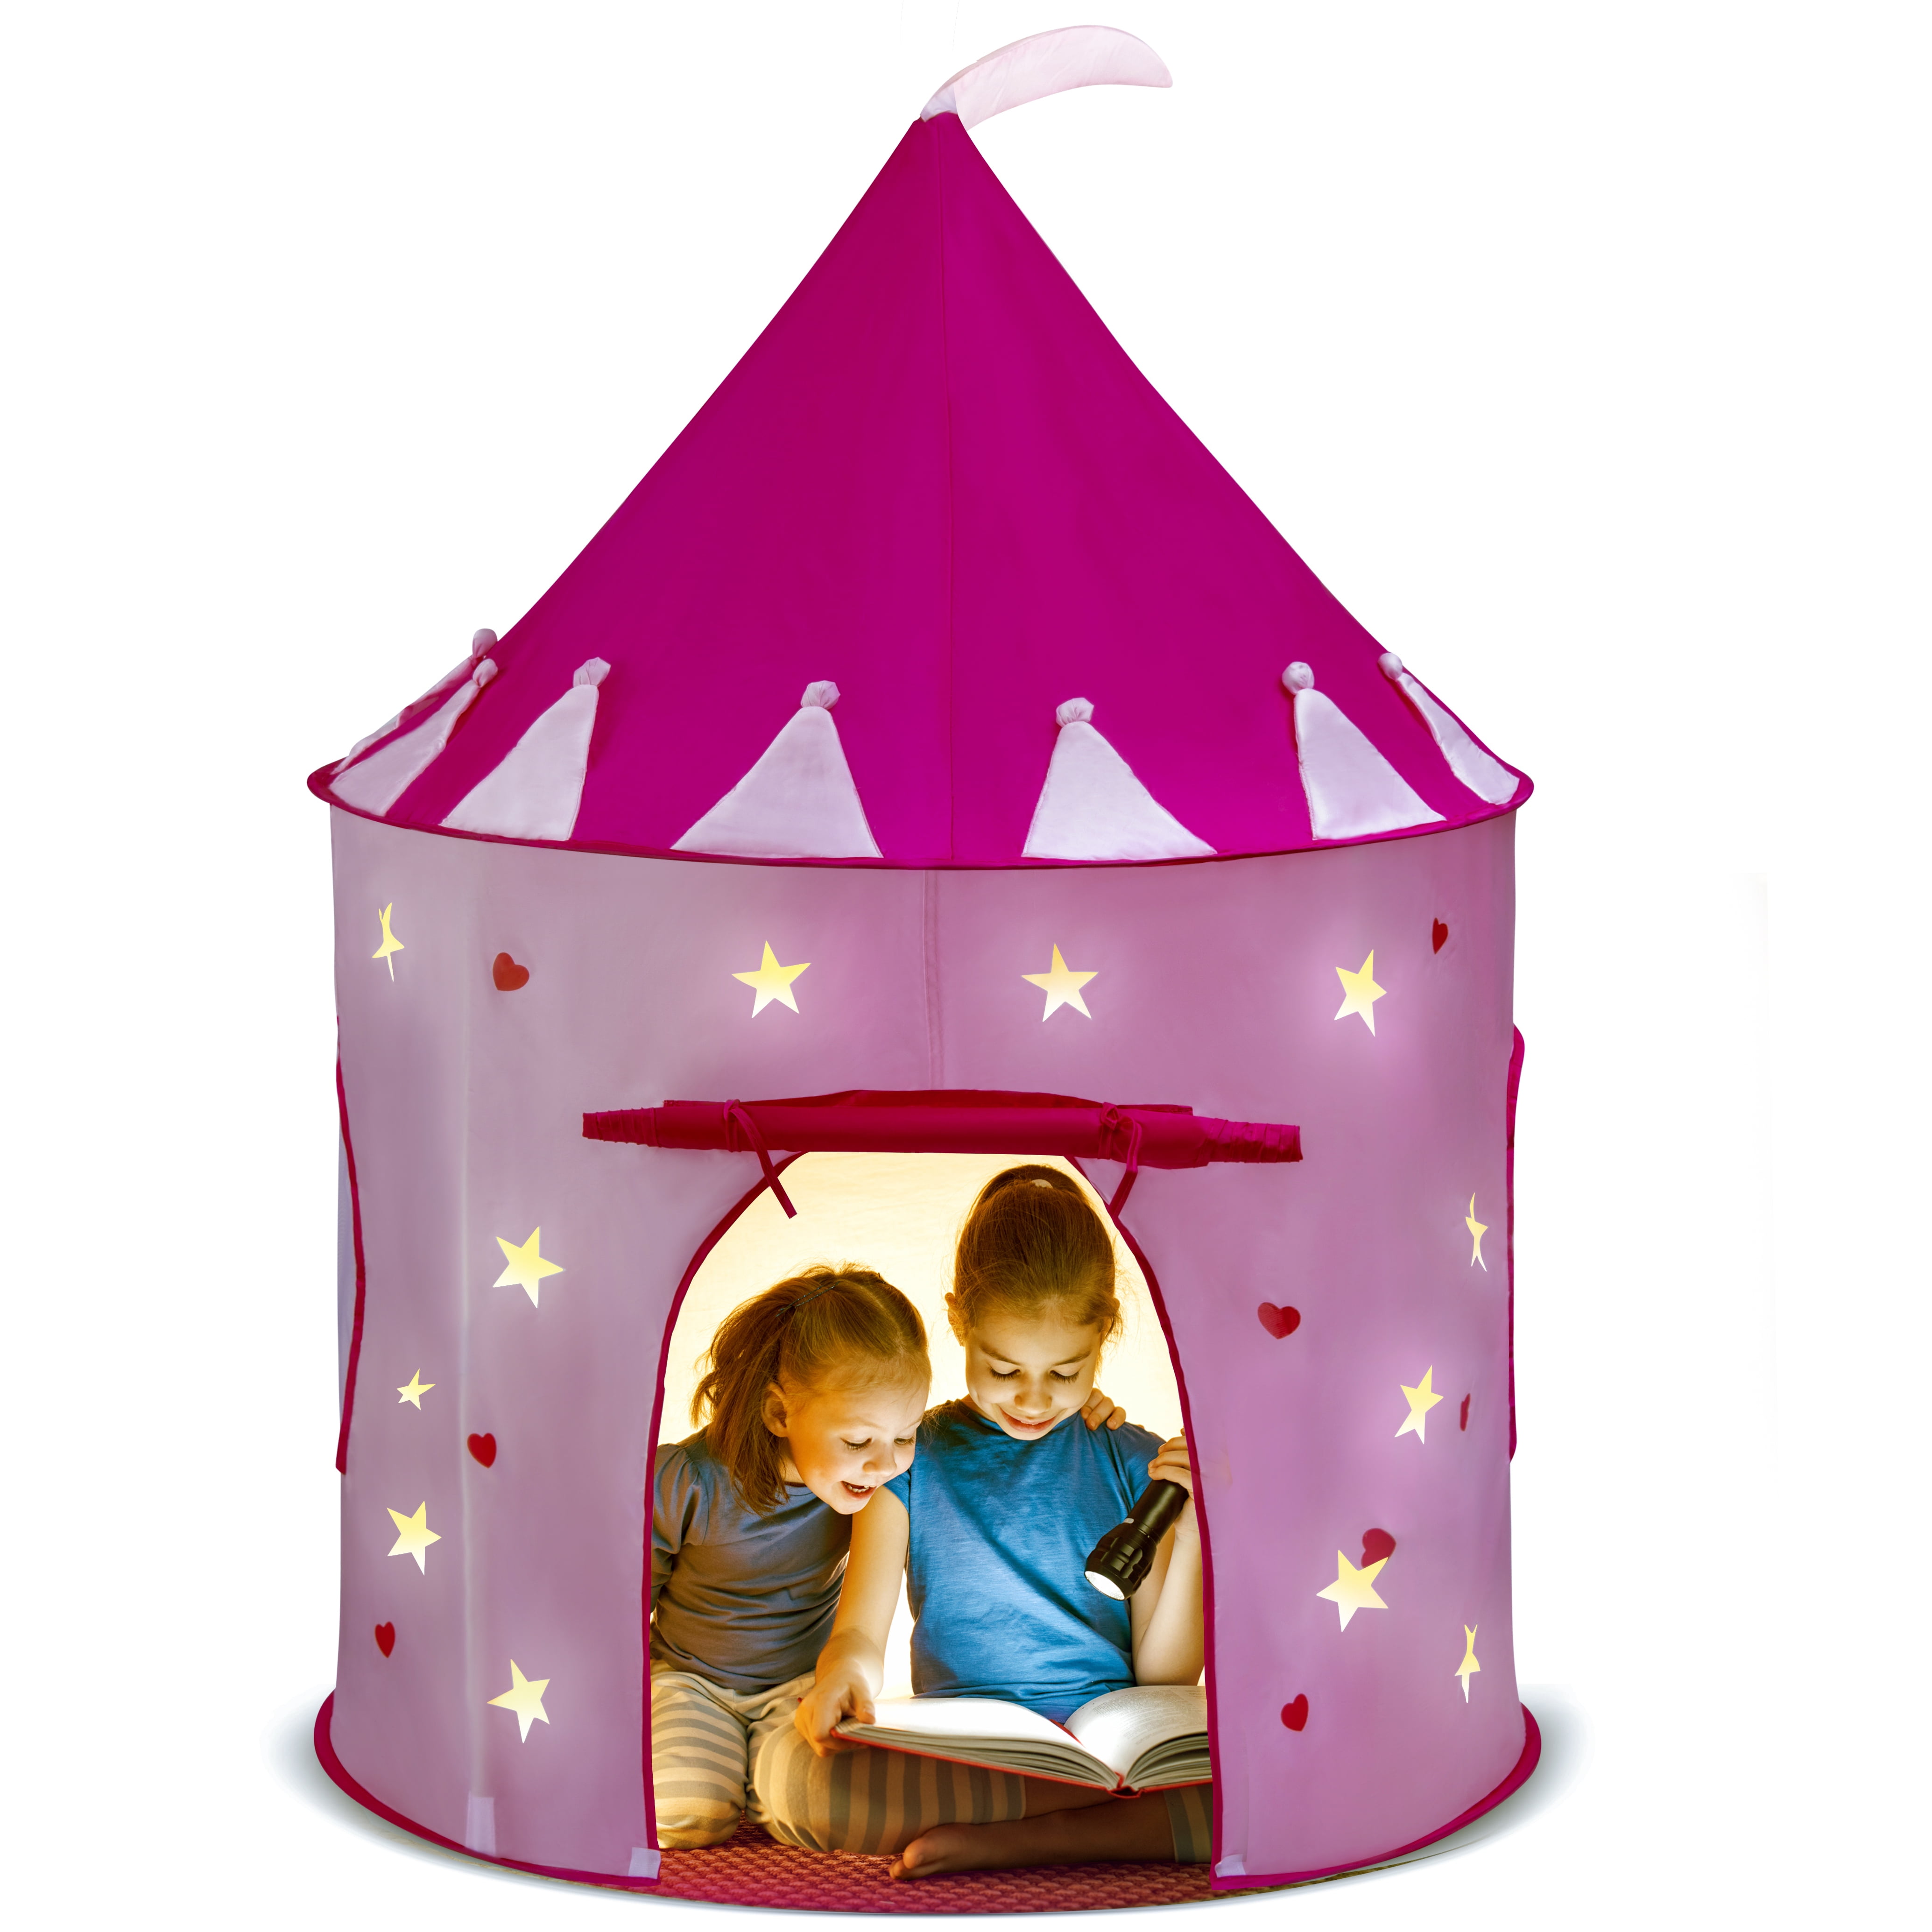 Chuckle & Roar Castle Pop-Up Kids' Play Tent